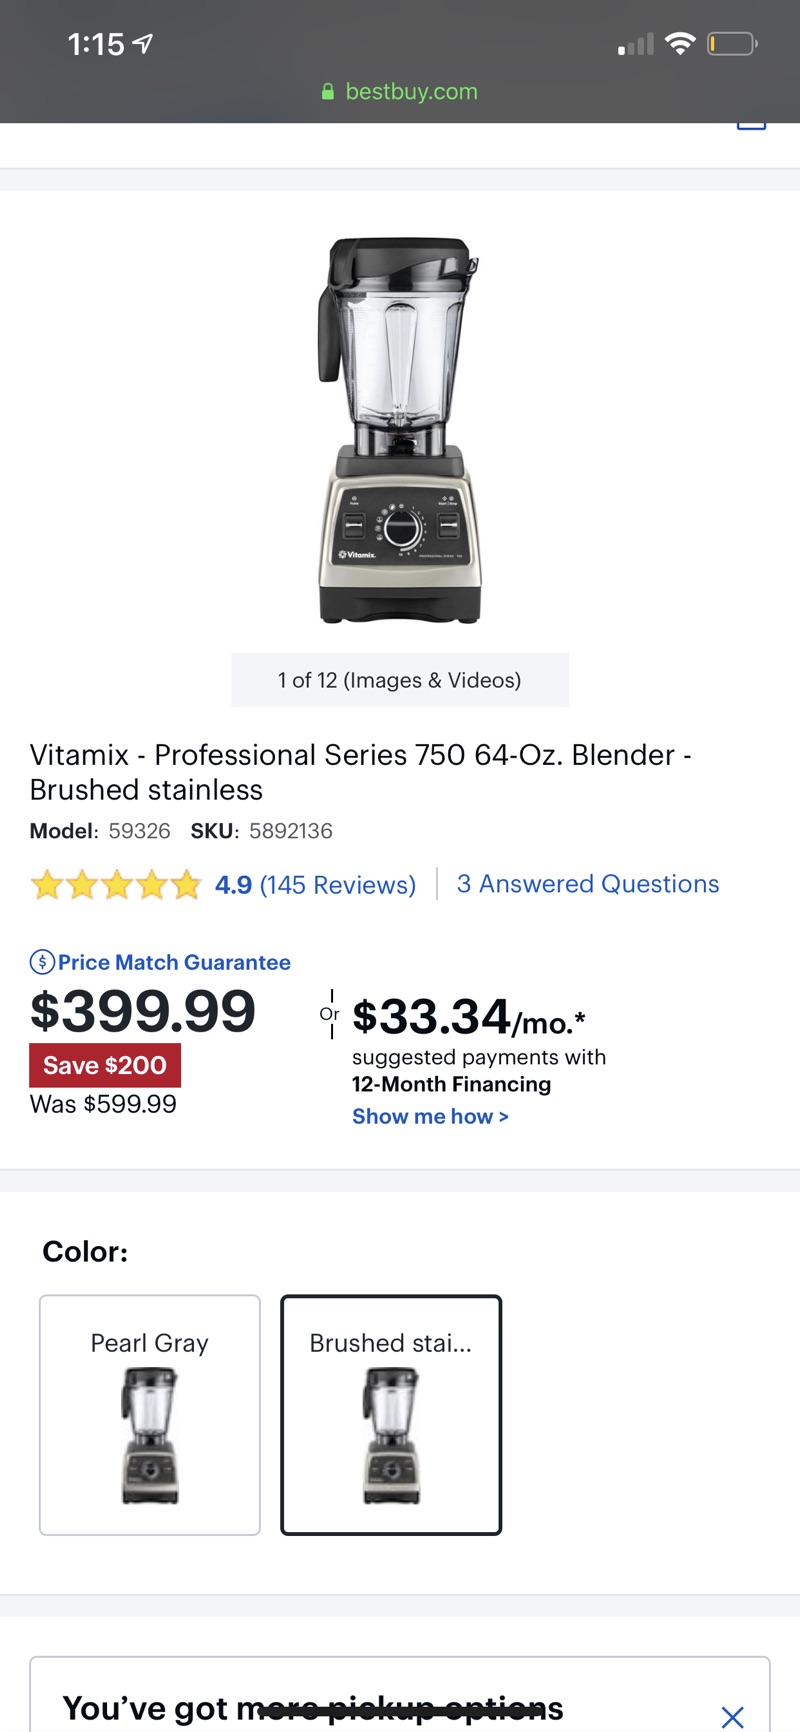 Best Buy | Official Online Store | Shop Now & Save
vitamix pro 750 史低价